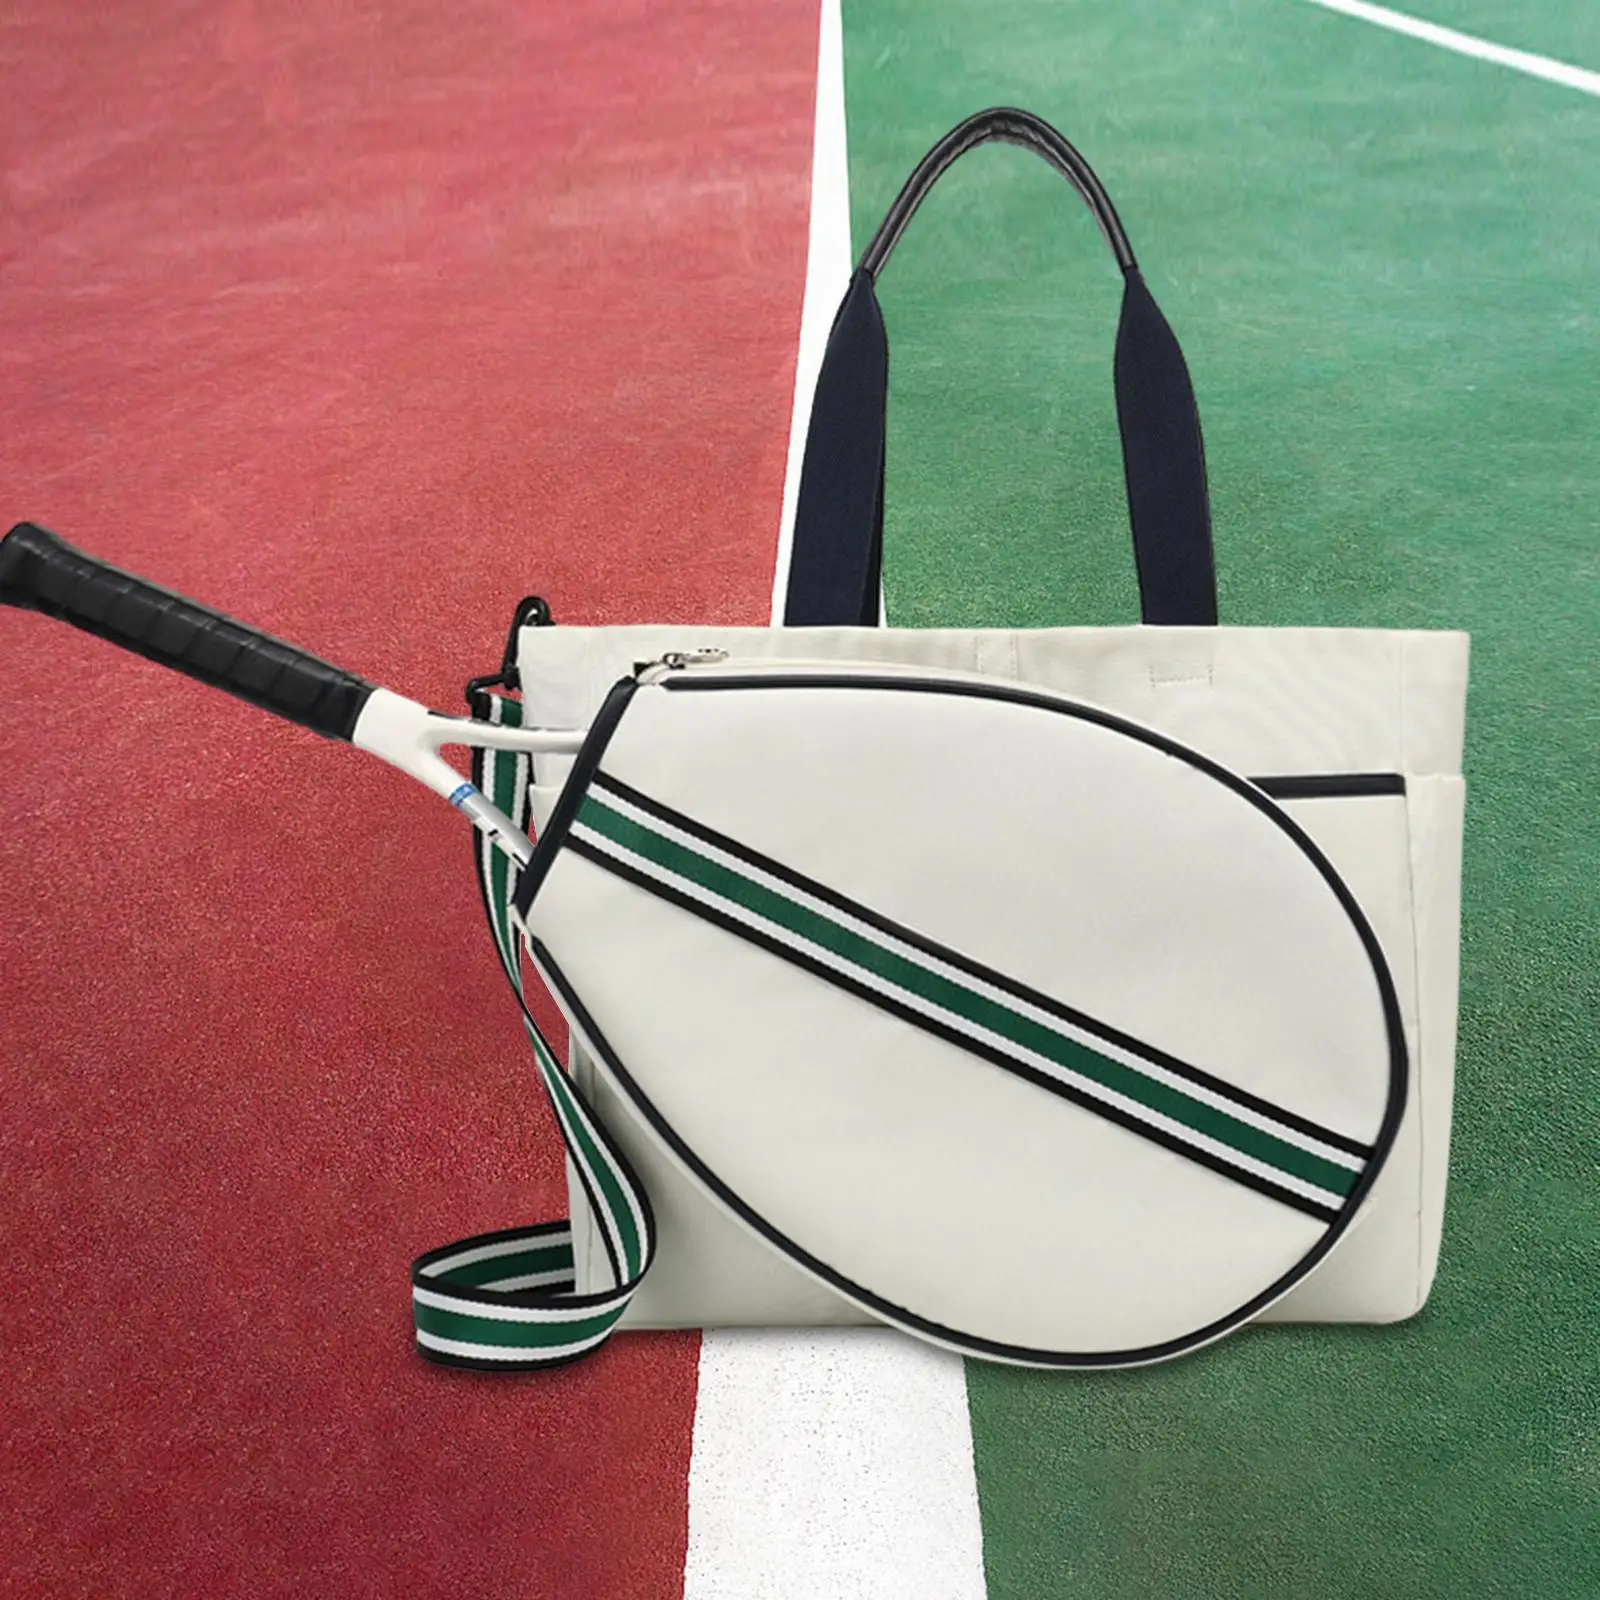 Tennis Tote Racquet Carrying Bag Large for Women Men Gym Sport Tennis Racket Shoulder Bag Tennis Racket Bag Badminton Bag